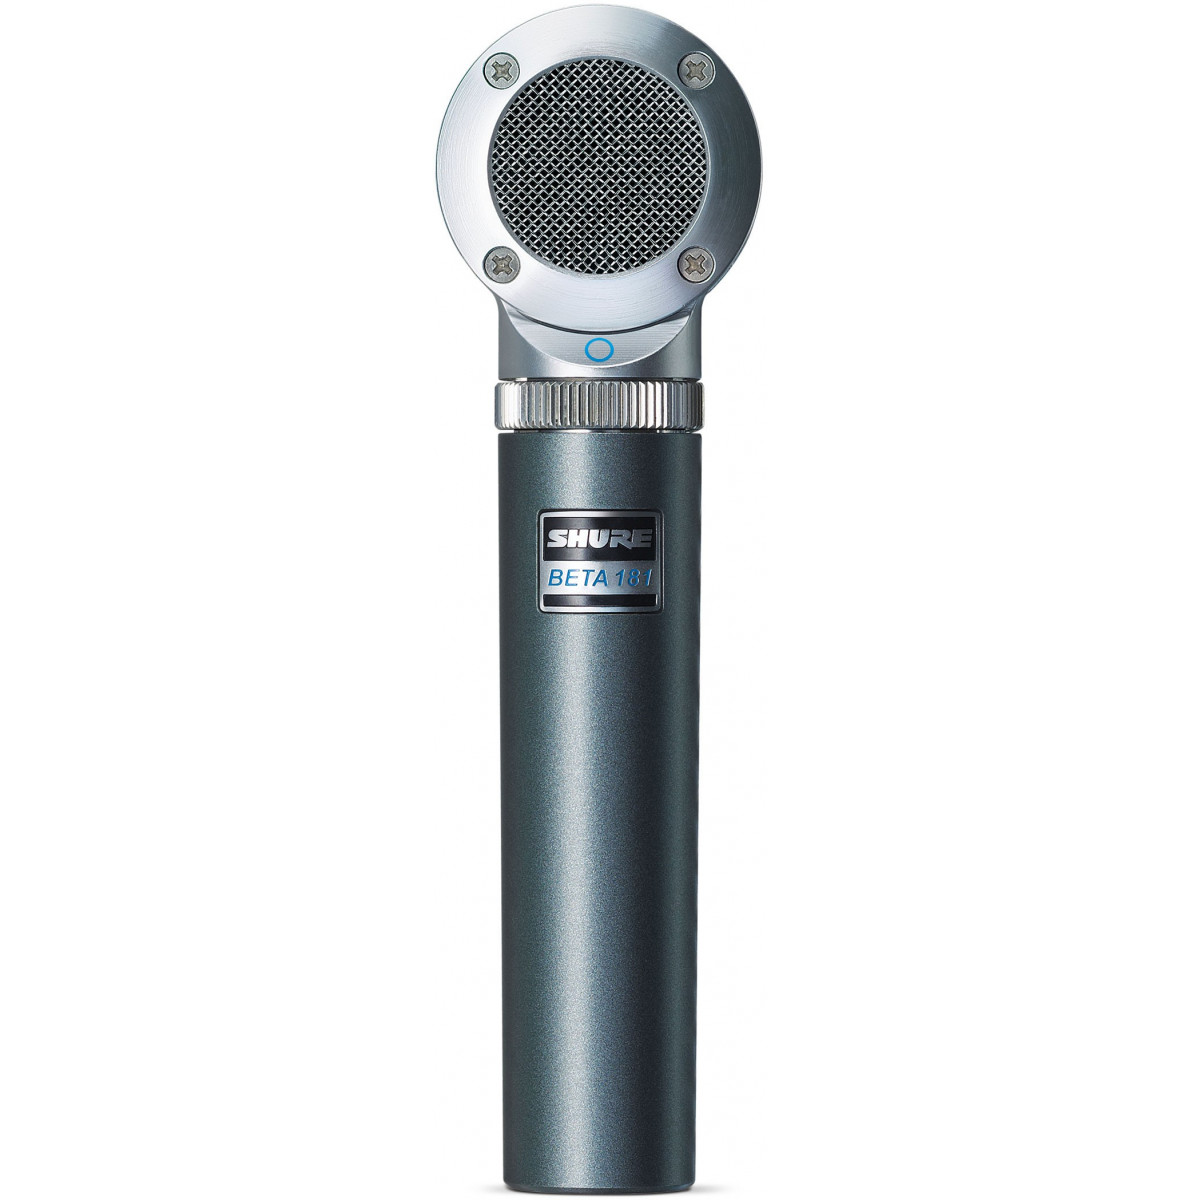 Micrófono de condensador con cápsula omnidireccional